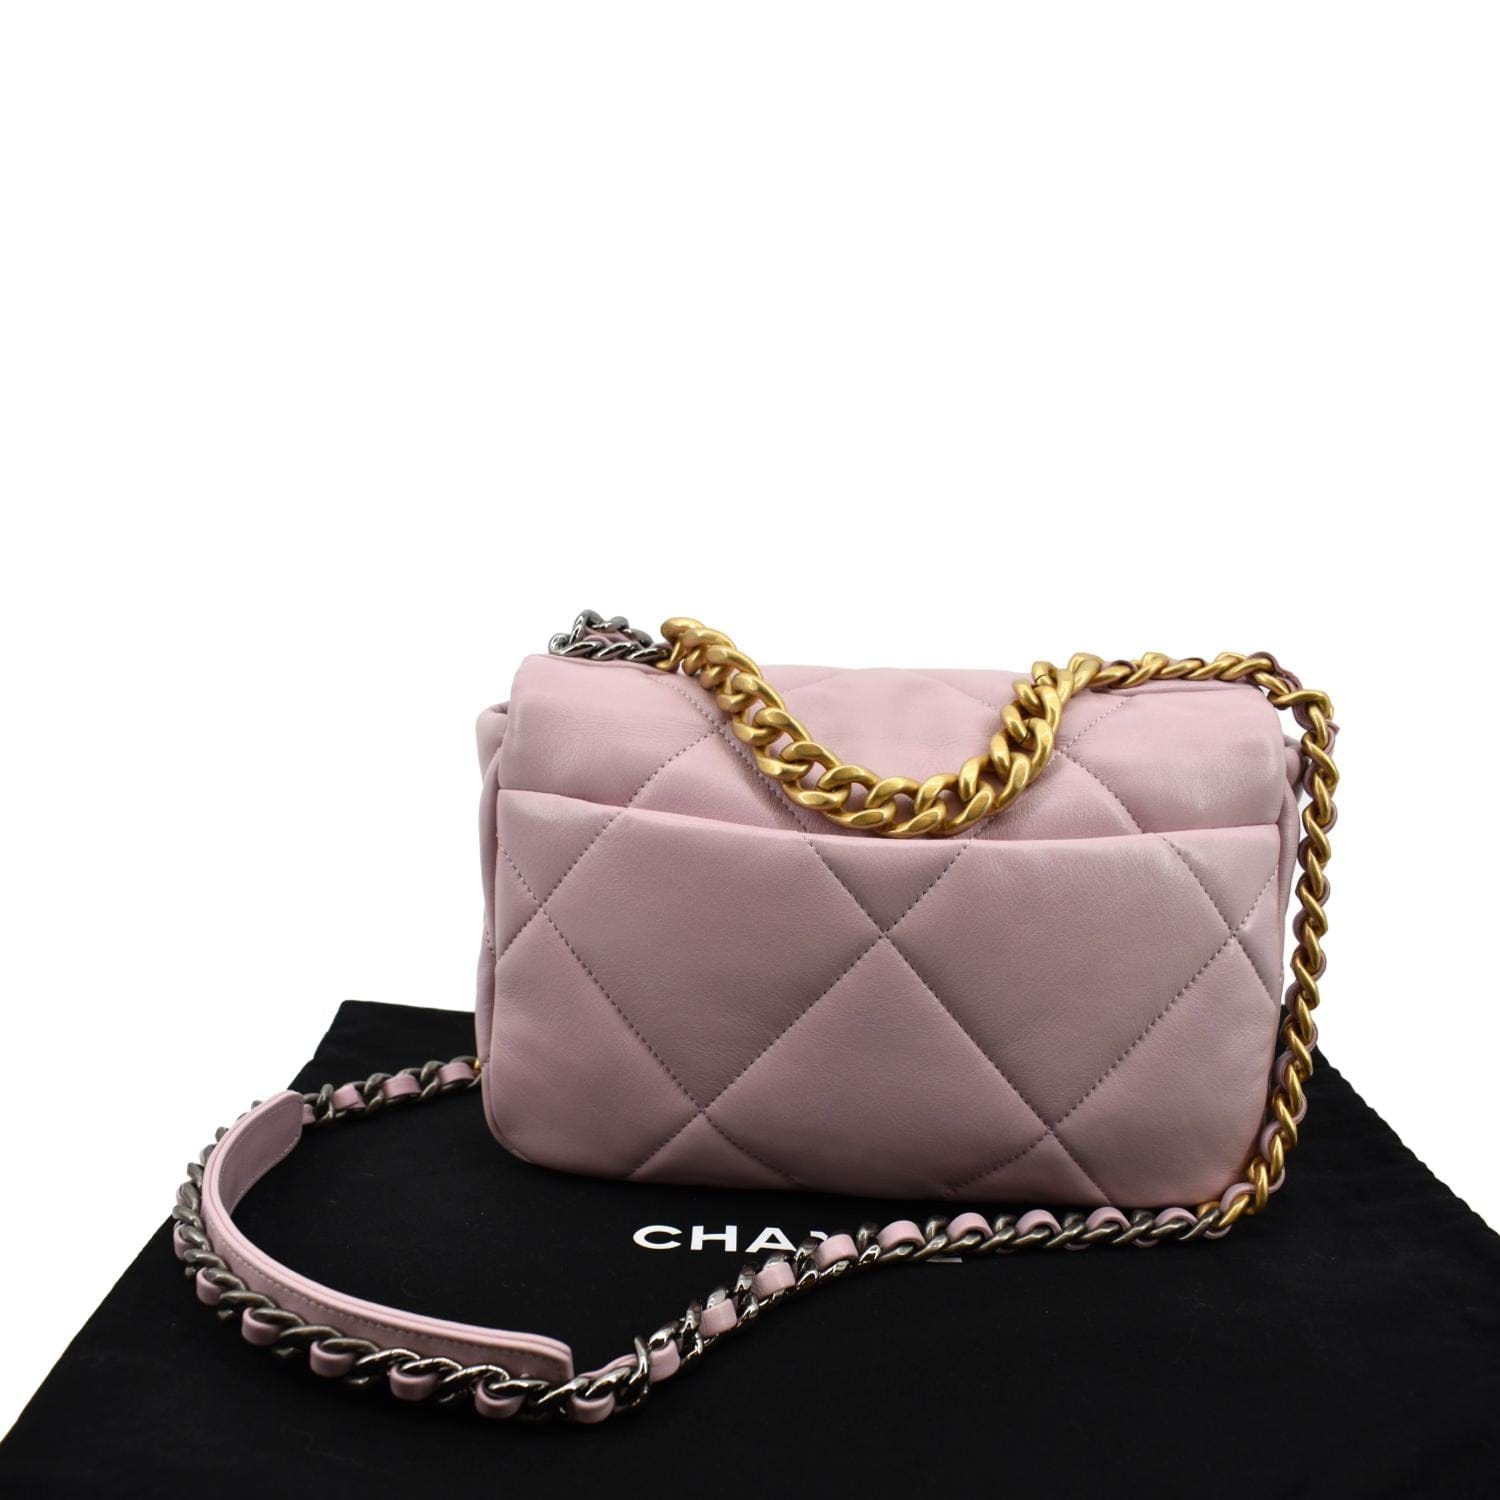 CHANEL 19 Medium Flap Quilted Lambskin Leather Shoulder Bag Pink